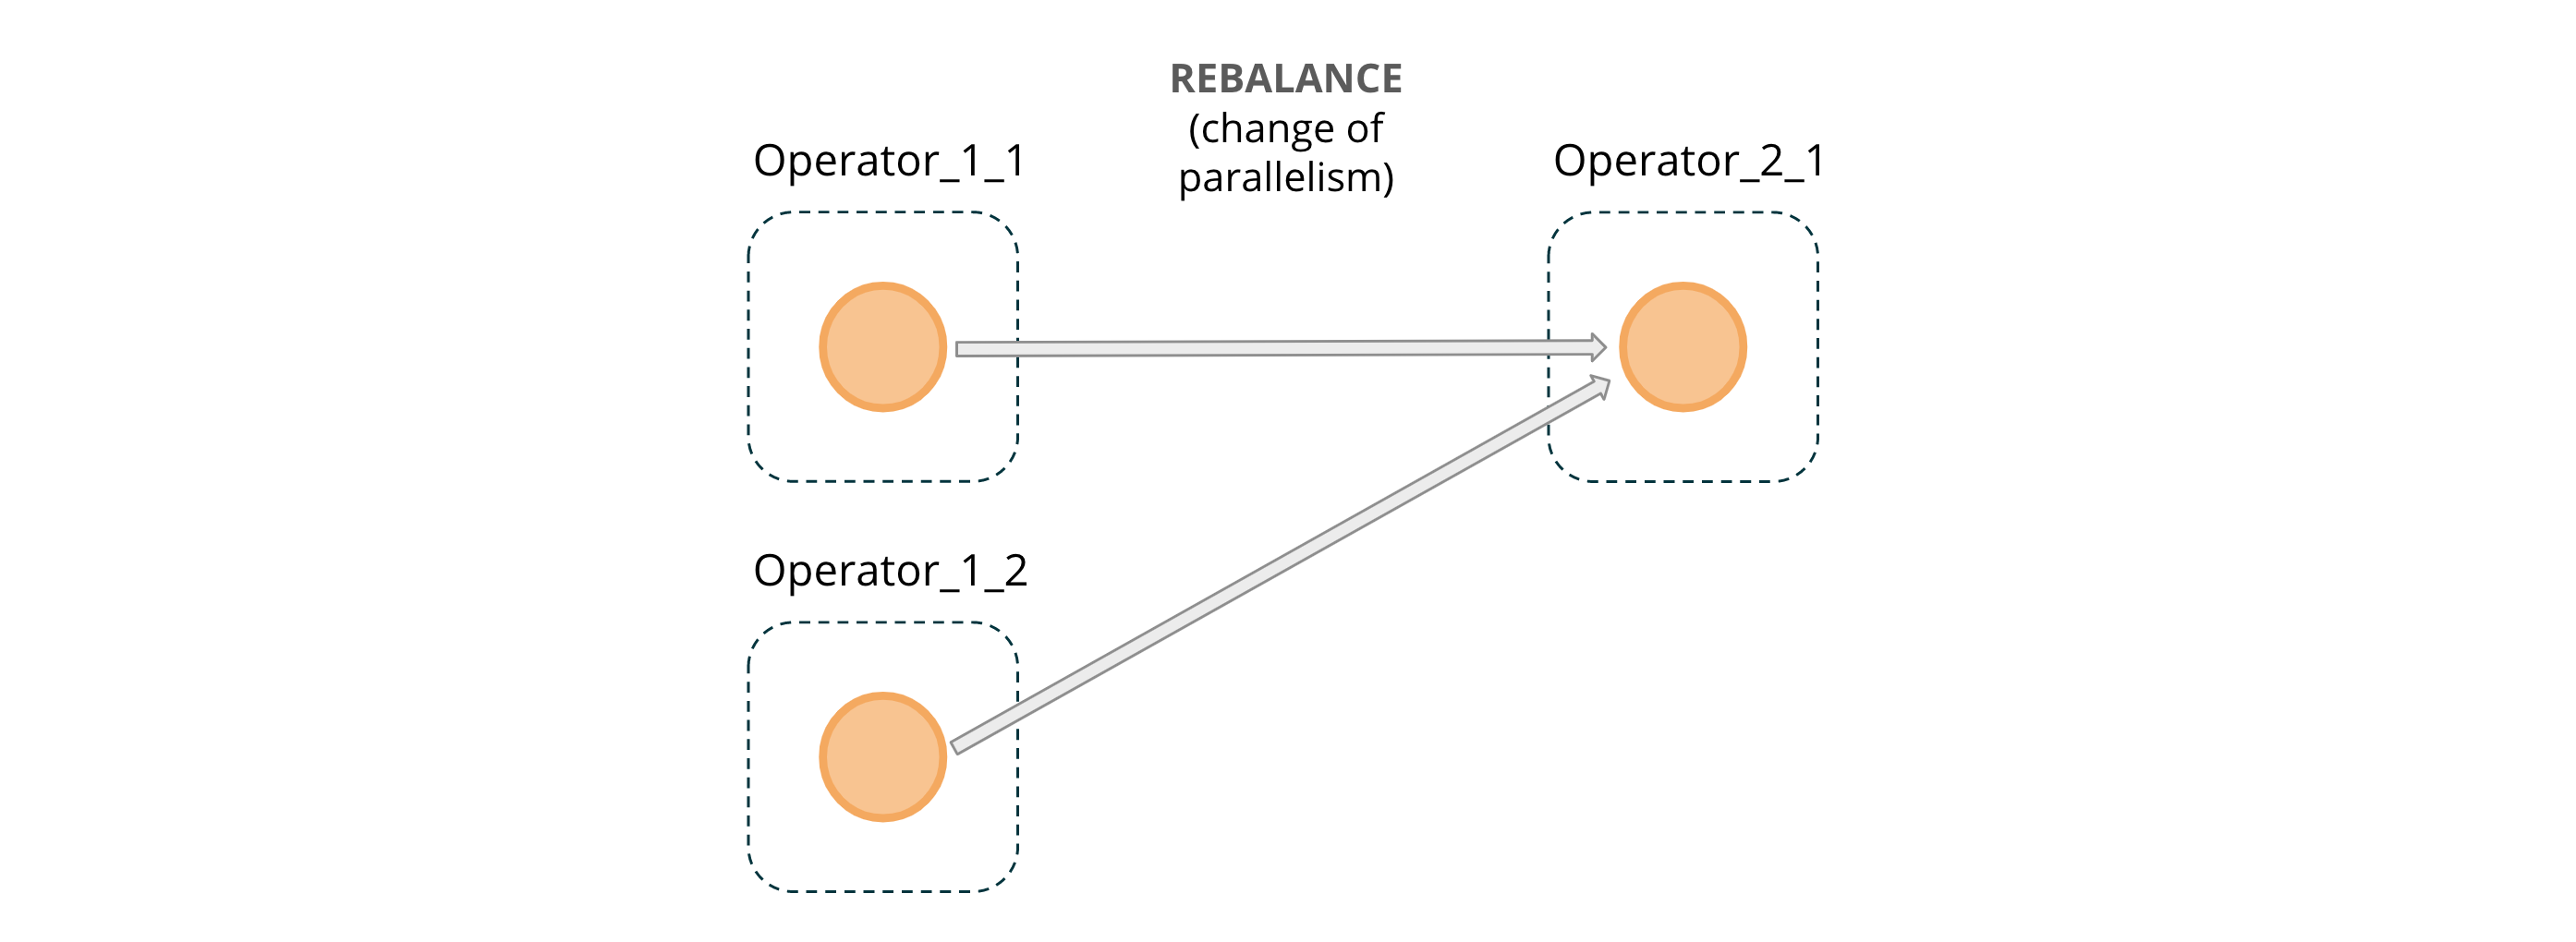 Figure 5: REBALANCE message passing across operator instances